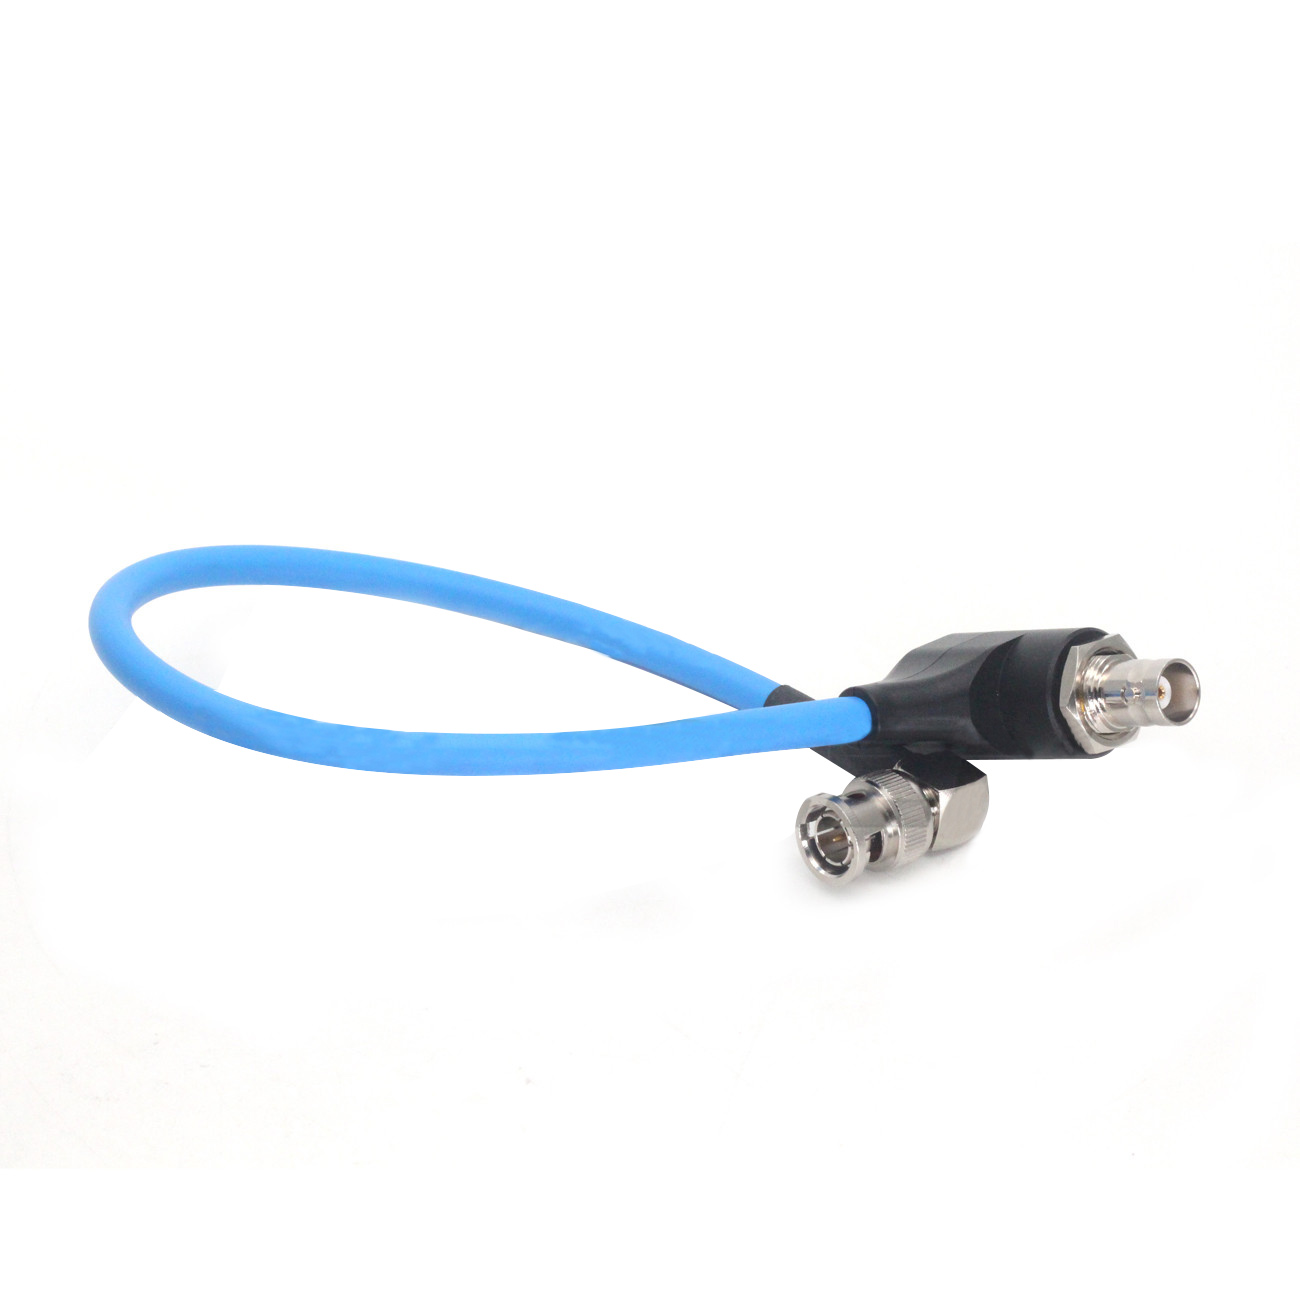 KO-10 SDI-Protector-Galvanic-isolator BNC Male to Female Cable for